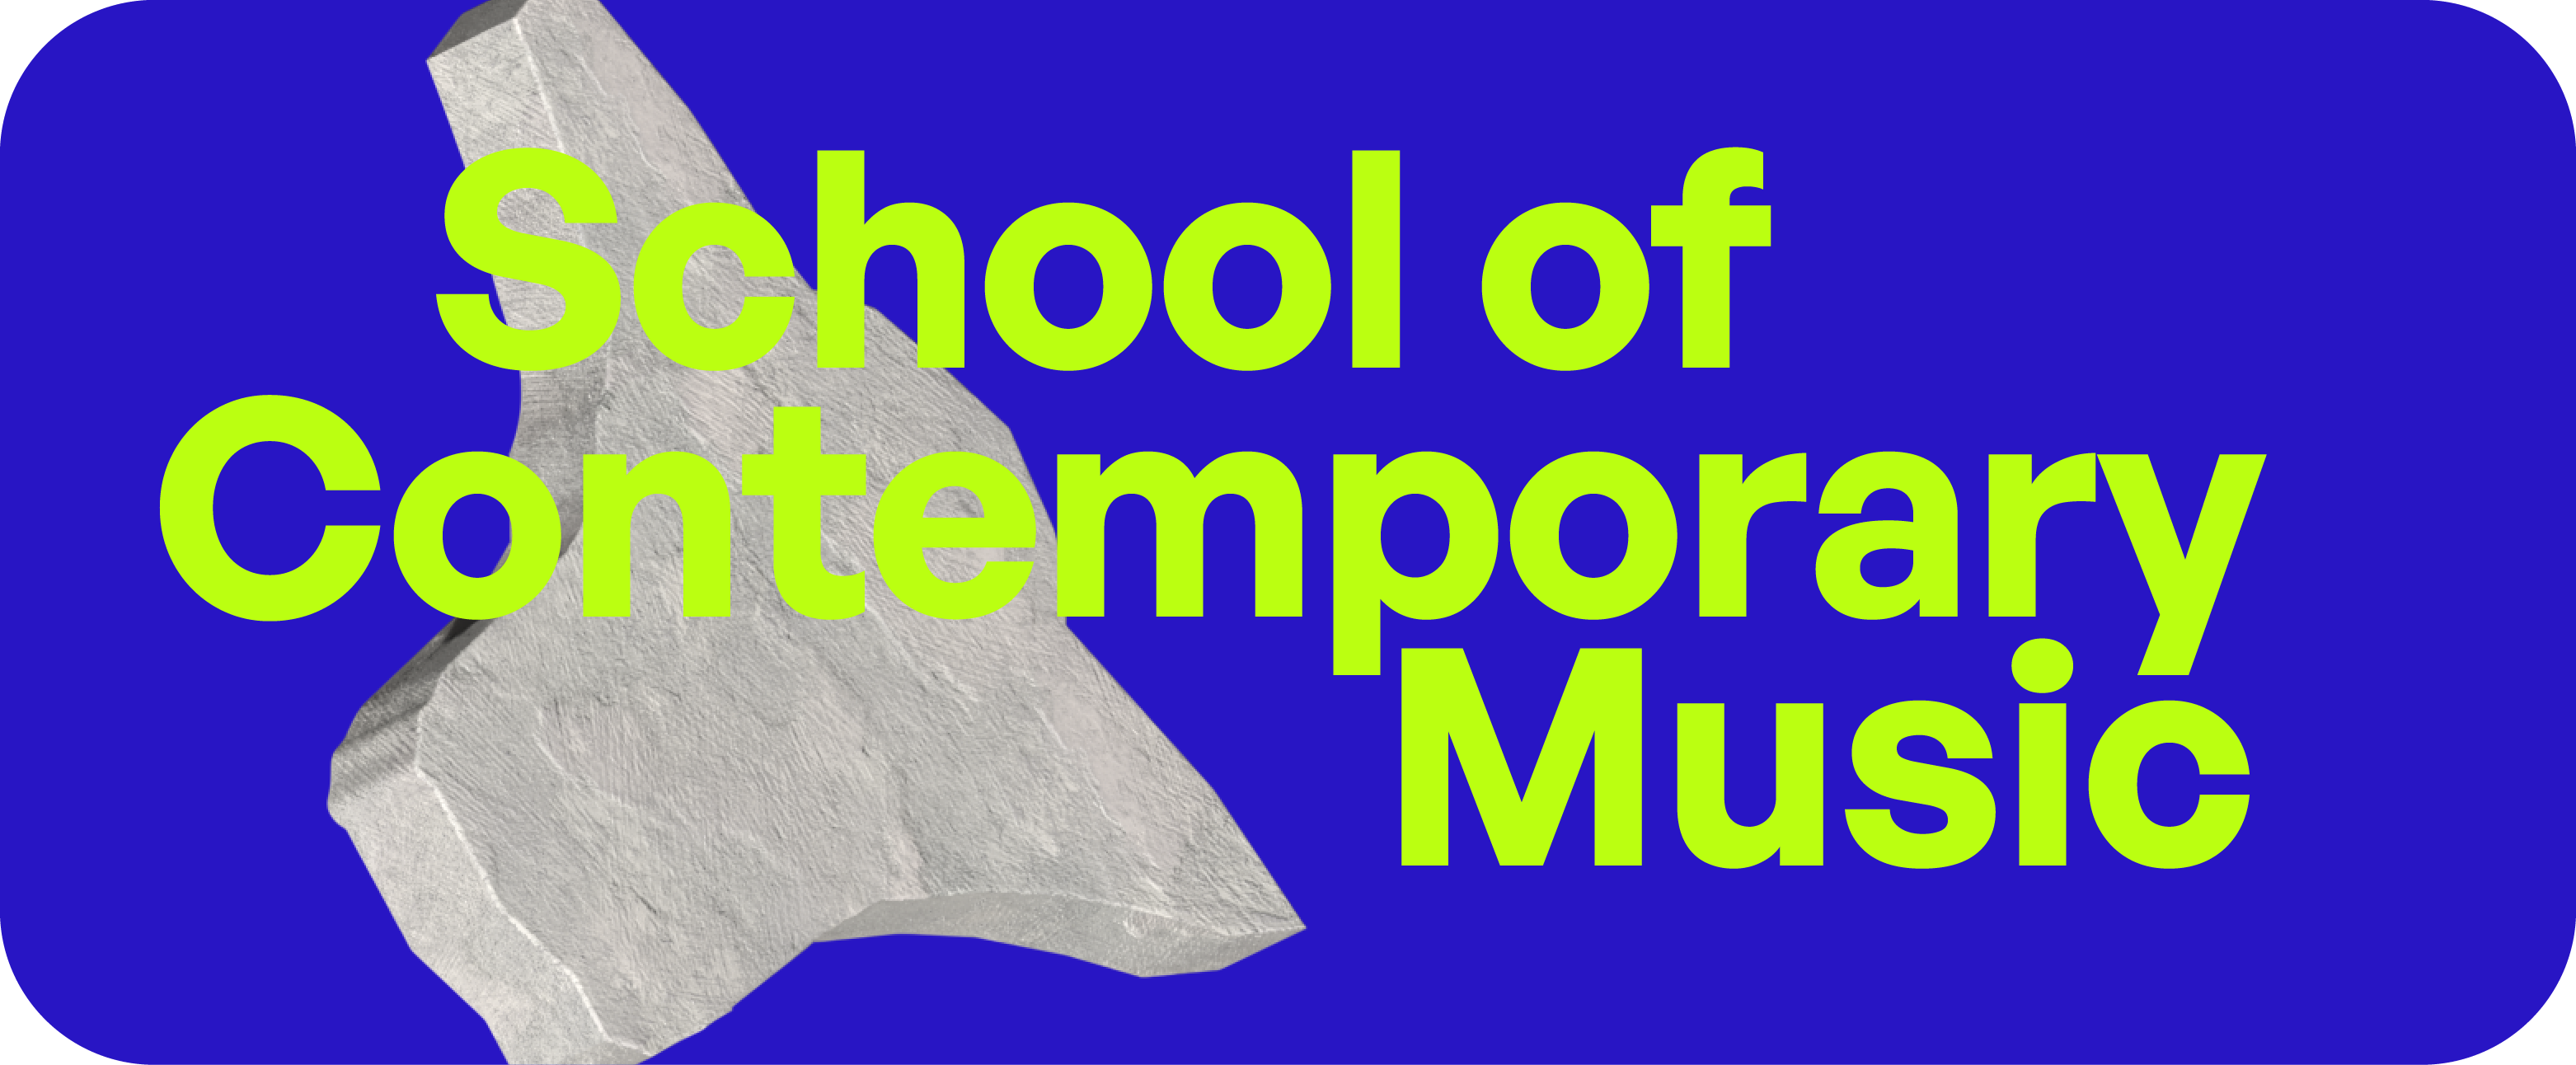 School of Contemporary Music